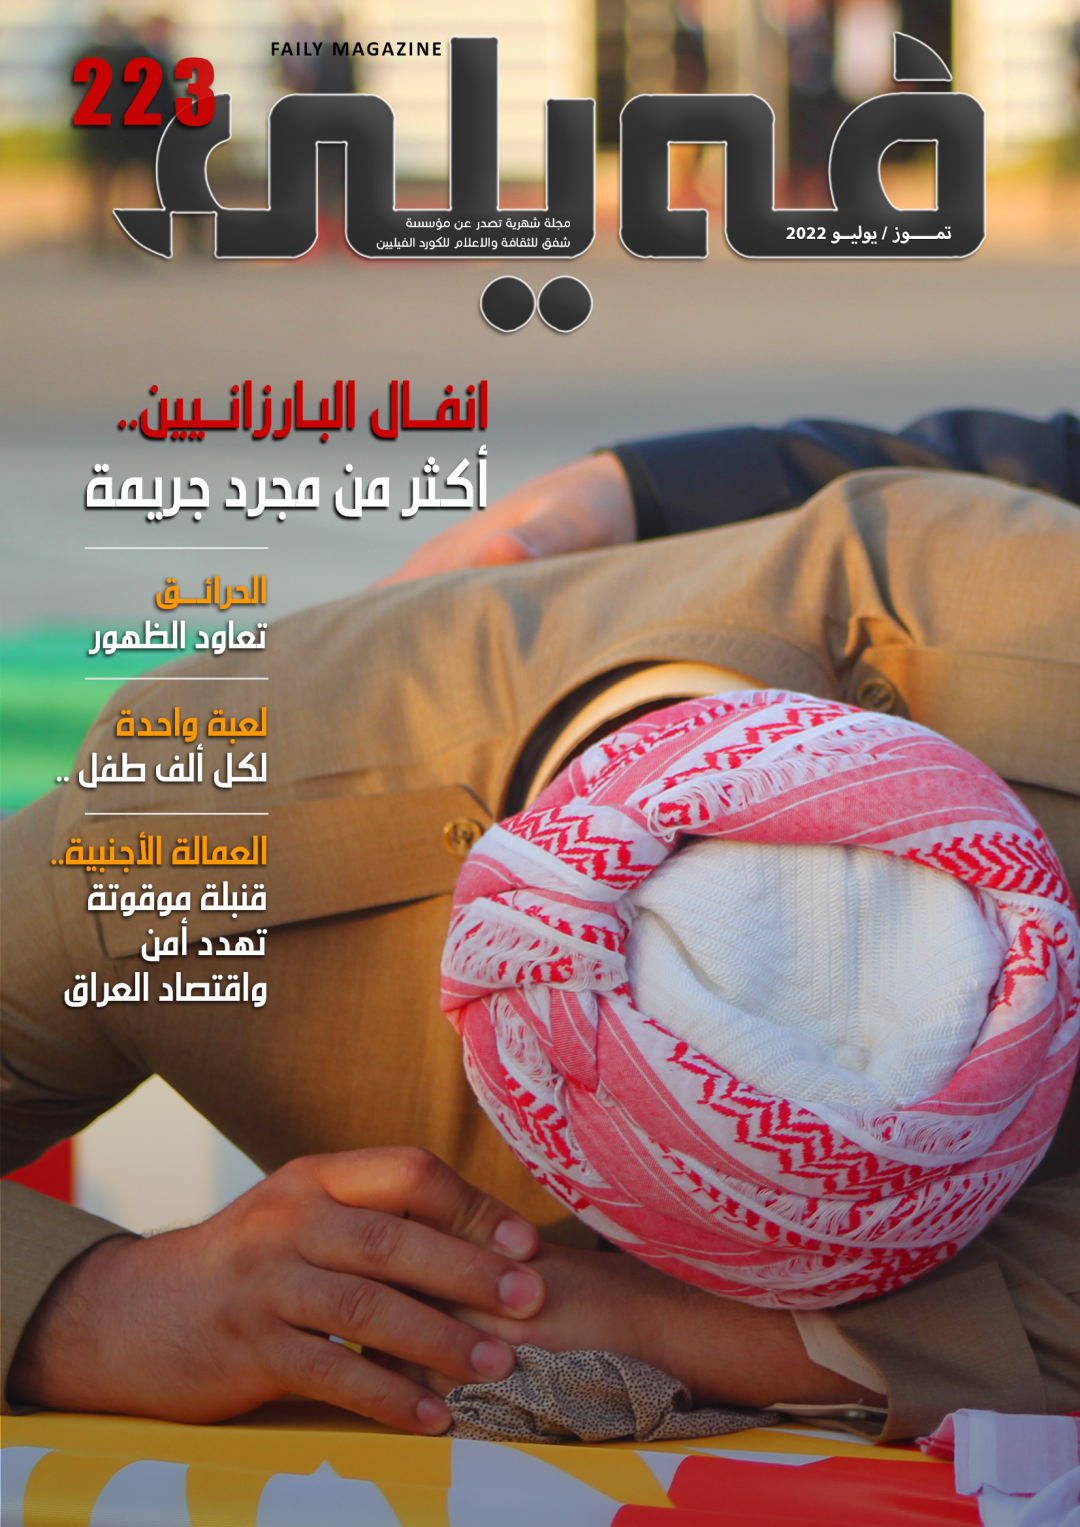 Faili Magazine 223th issue